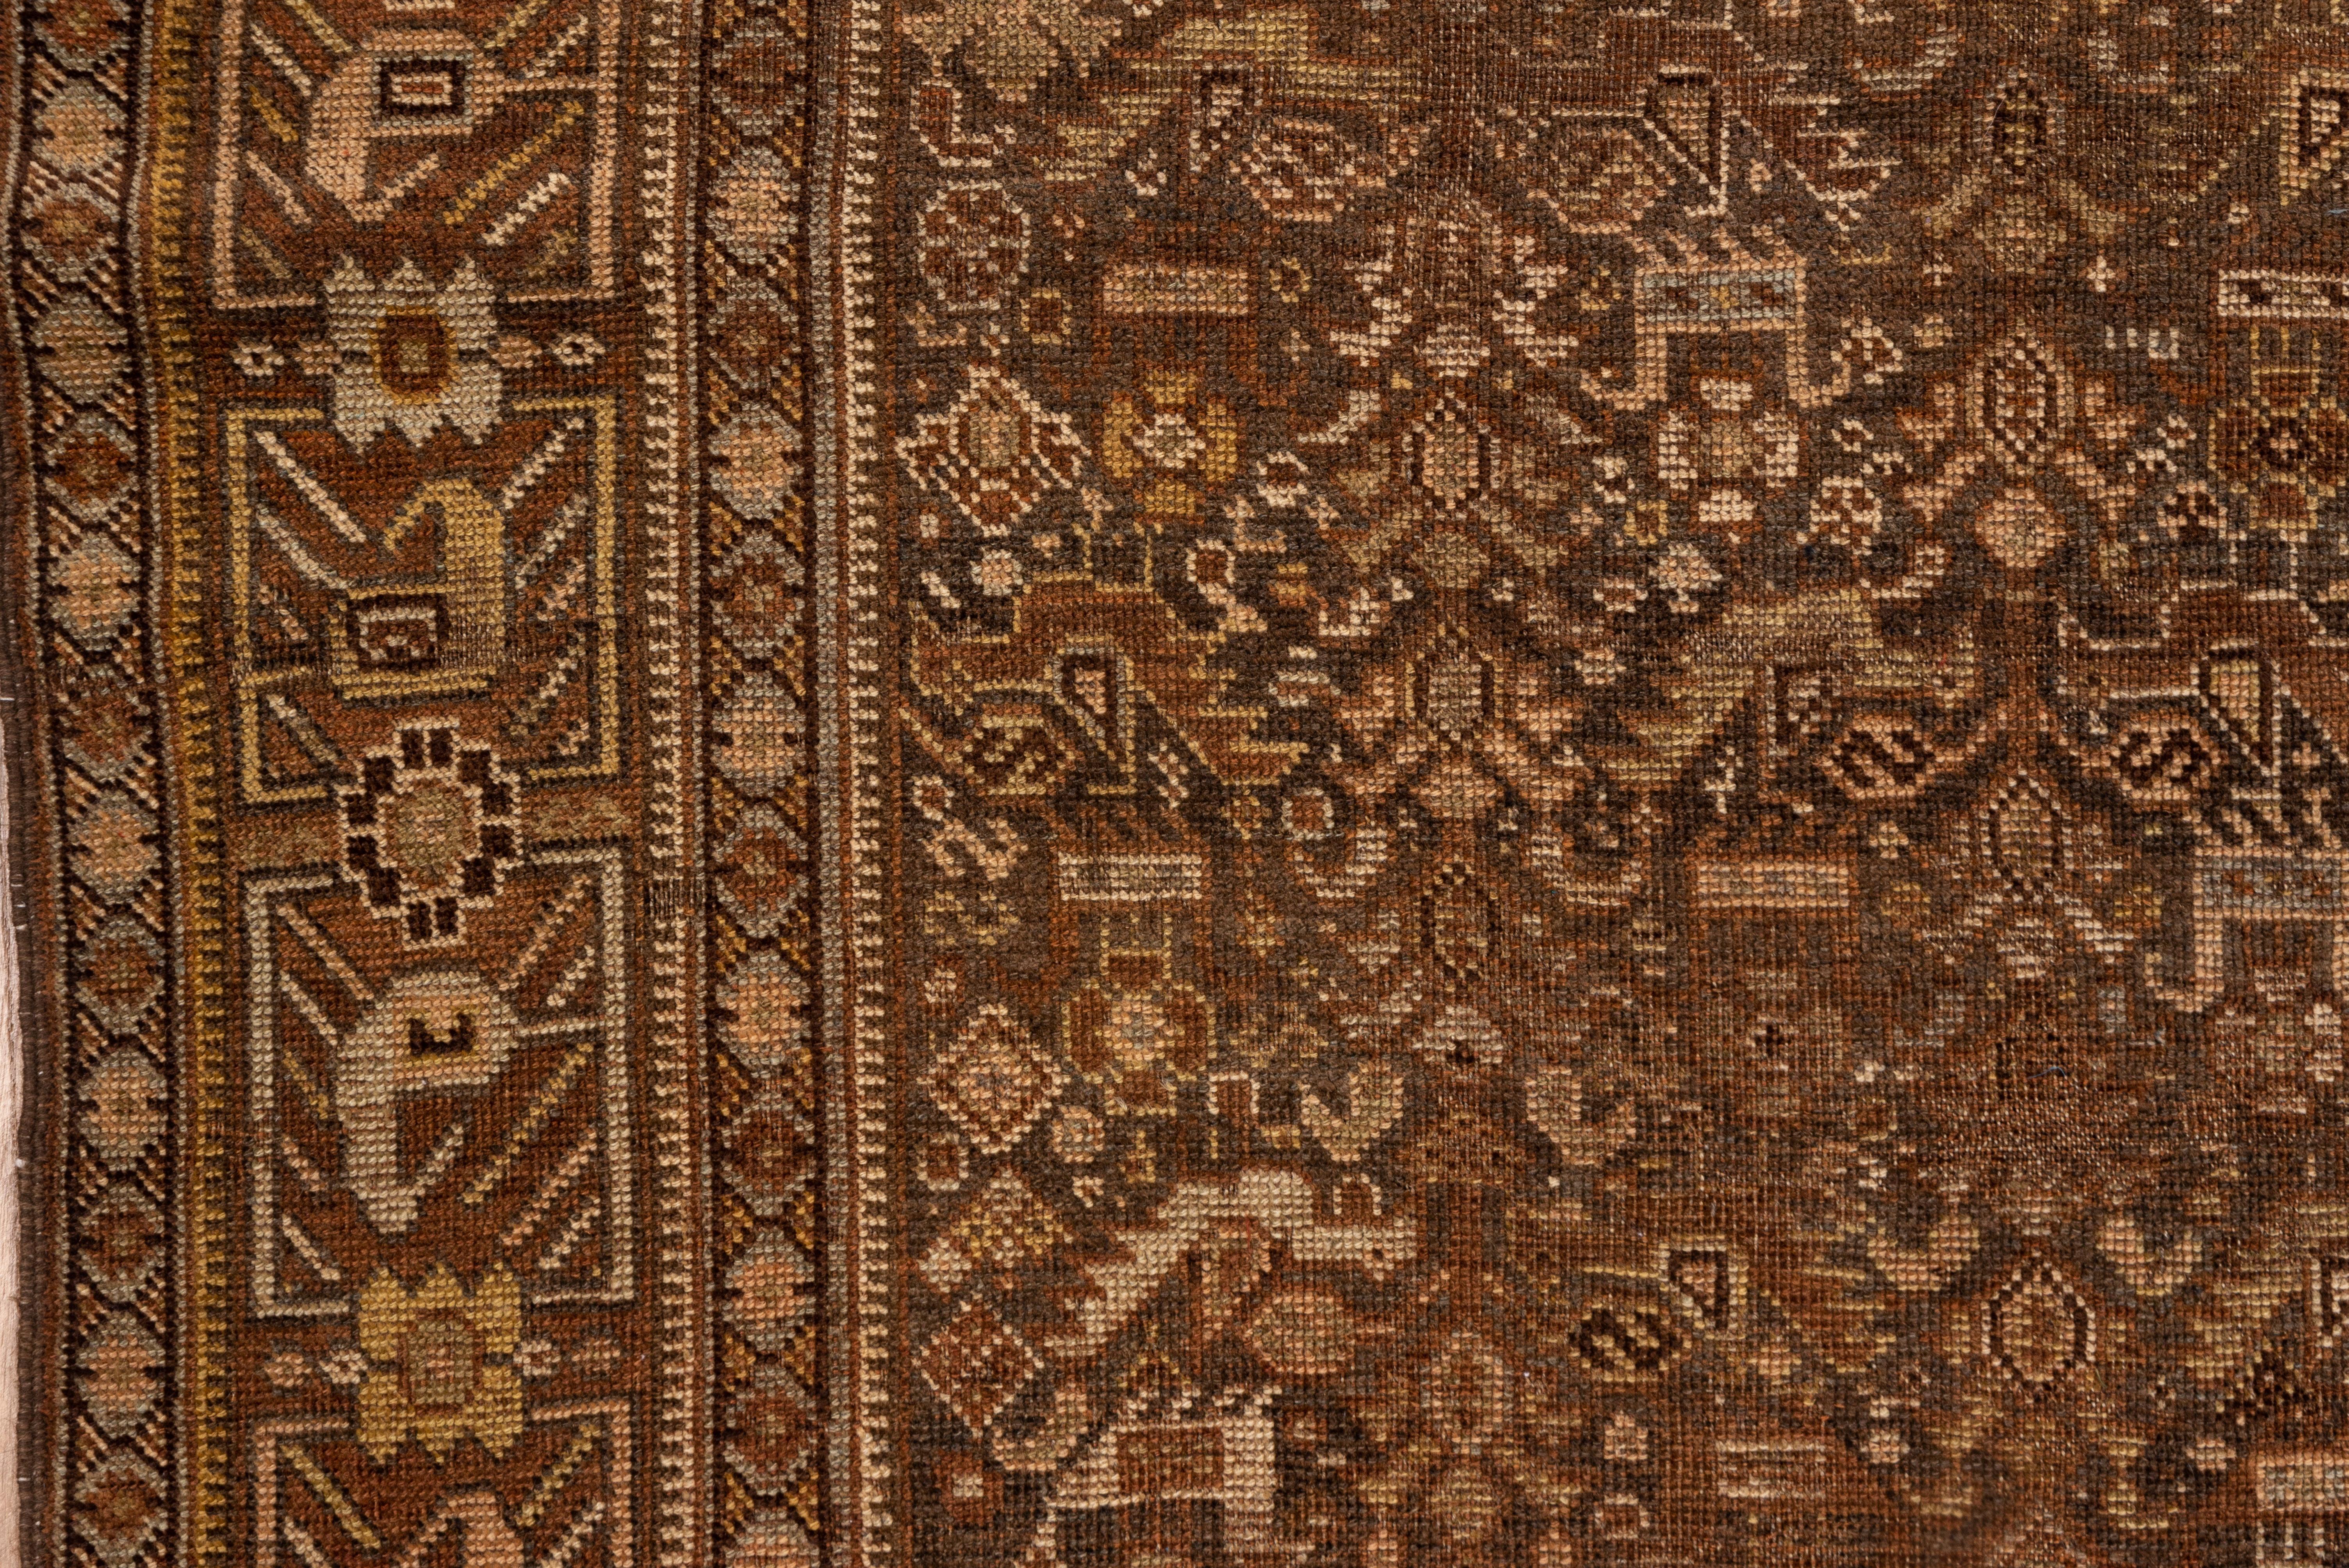 Wool Rustic Persian Shiraz Pictorial Rug, Brown & Rust Tones, circa 1920s For Sale